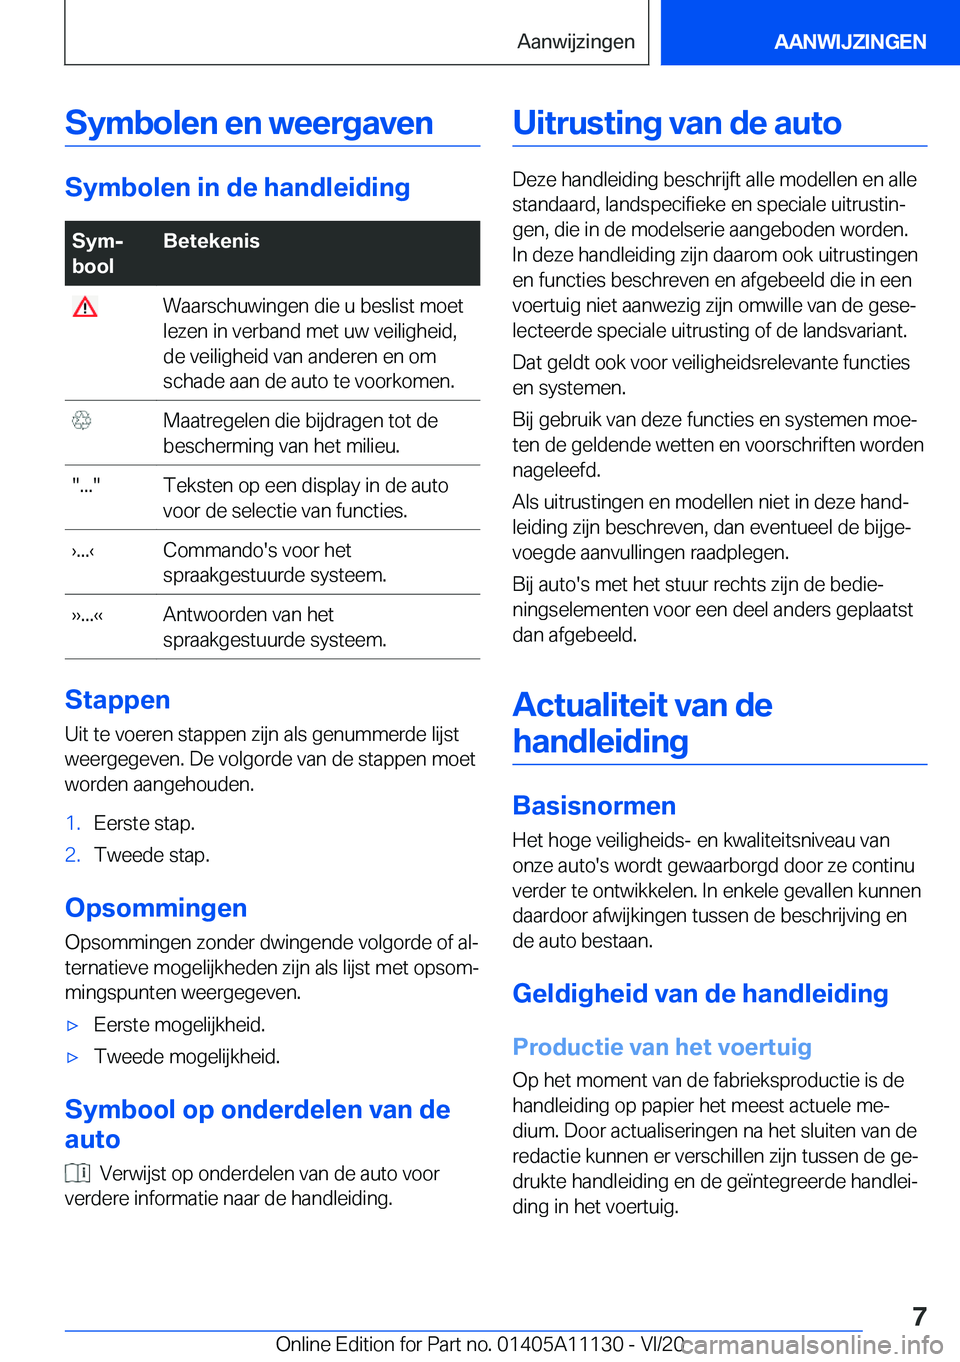 BMW 8 SERIES COUPE 2021  Instructieboekjes (in Dutch) �S�y�m�b�o�l�e�n��e�n��w�e�e�r�g�a�v�e�n
�S�y�m�b�o�l�e�n��i�n��d�e��h�a�n�d�l�e�i�d�i�n�g
�S�y�mj
�b�o�o�l�B�e�t�e�k�e�n�i�s��W�a�a�r�s�c�h�u�w�i�n�g�e�n��d�i�e��u��b�e�s�l�i�s�t��m�o�e�t
